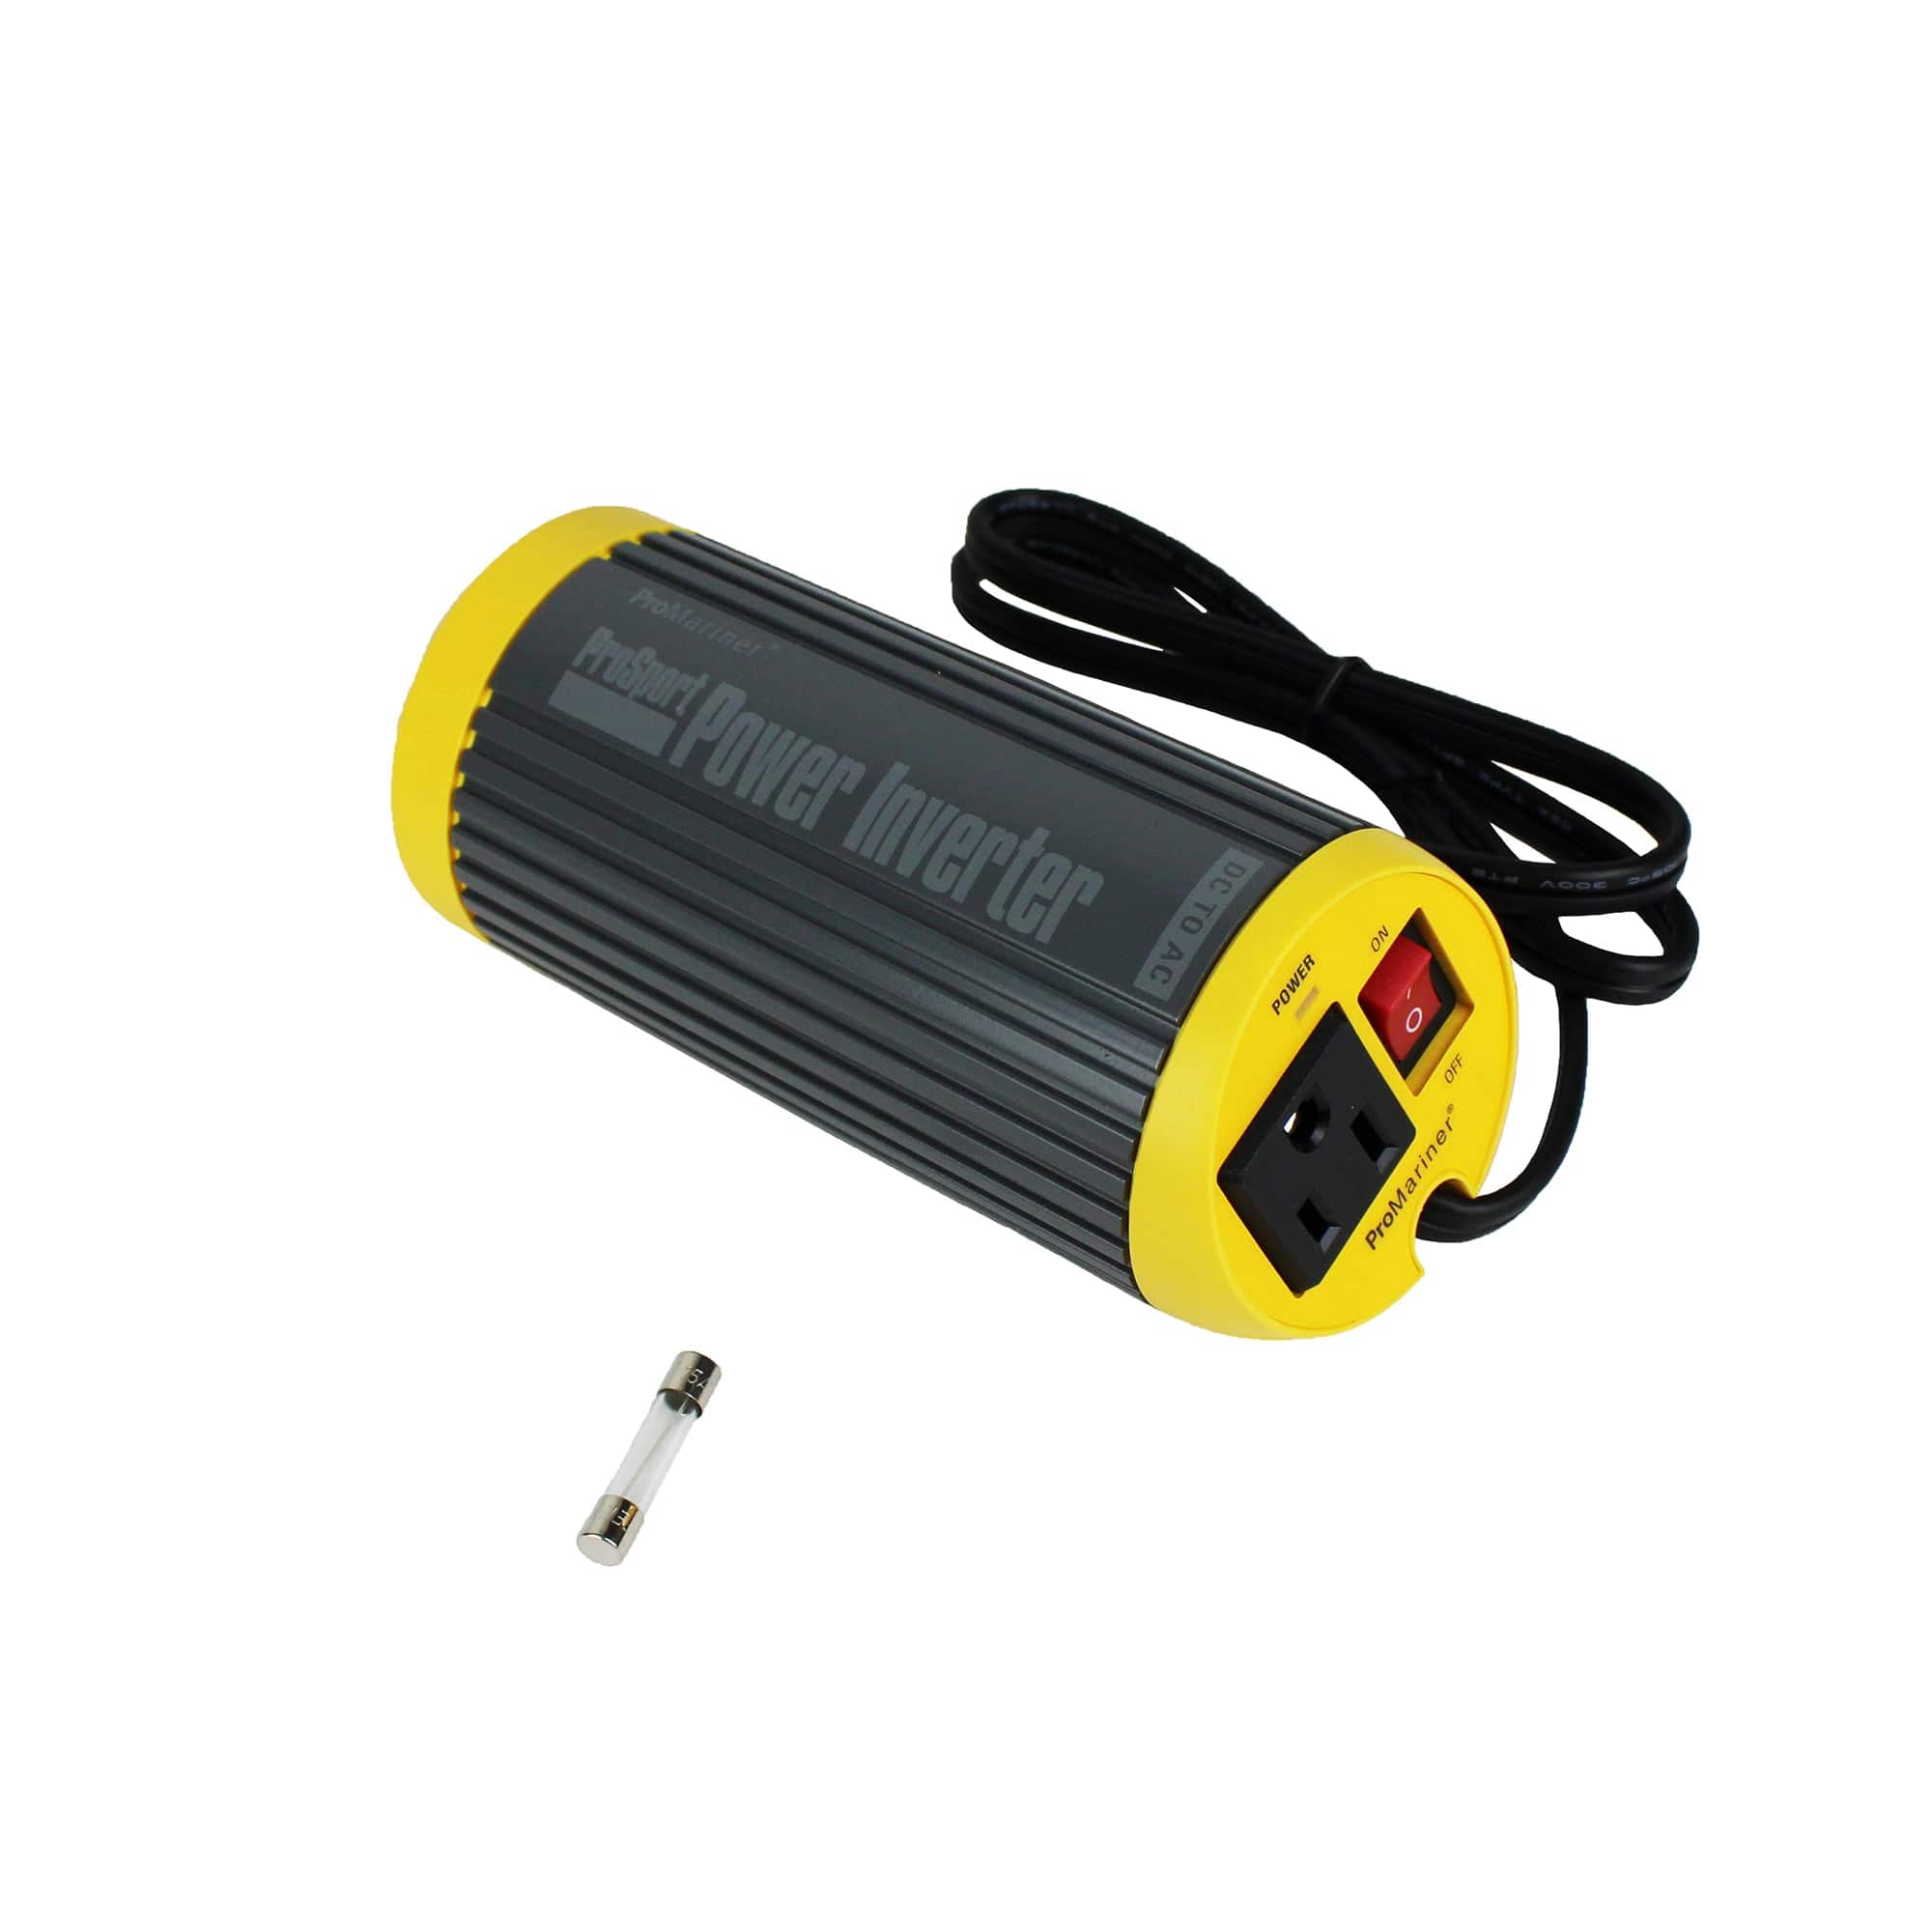 PW6000-12 - Power Bright - Inverters, Voltage Converters